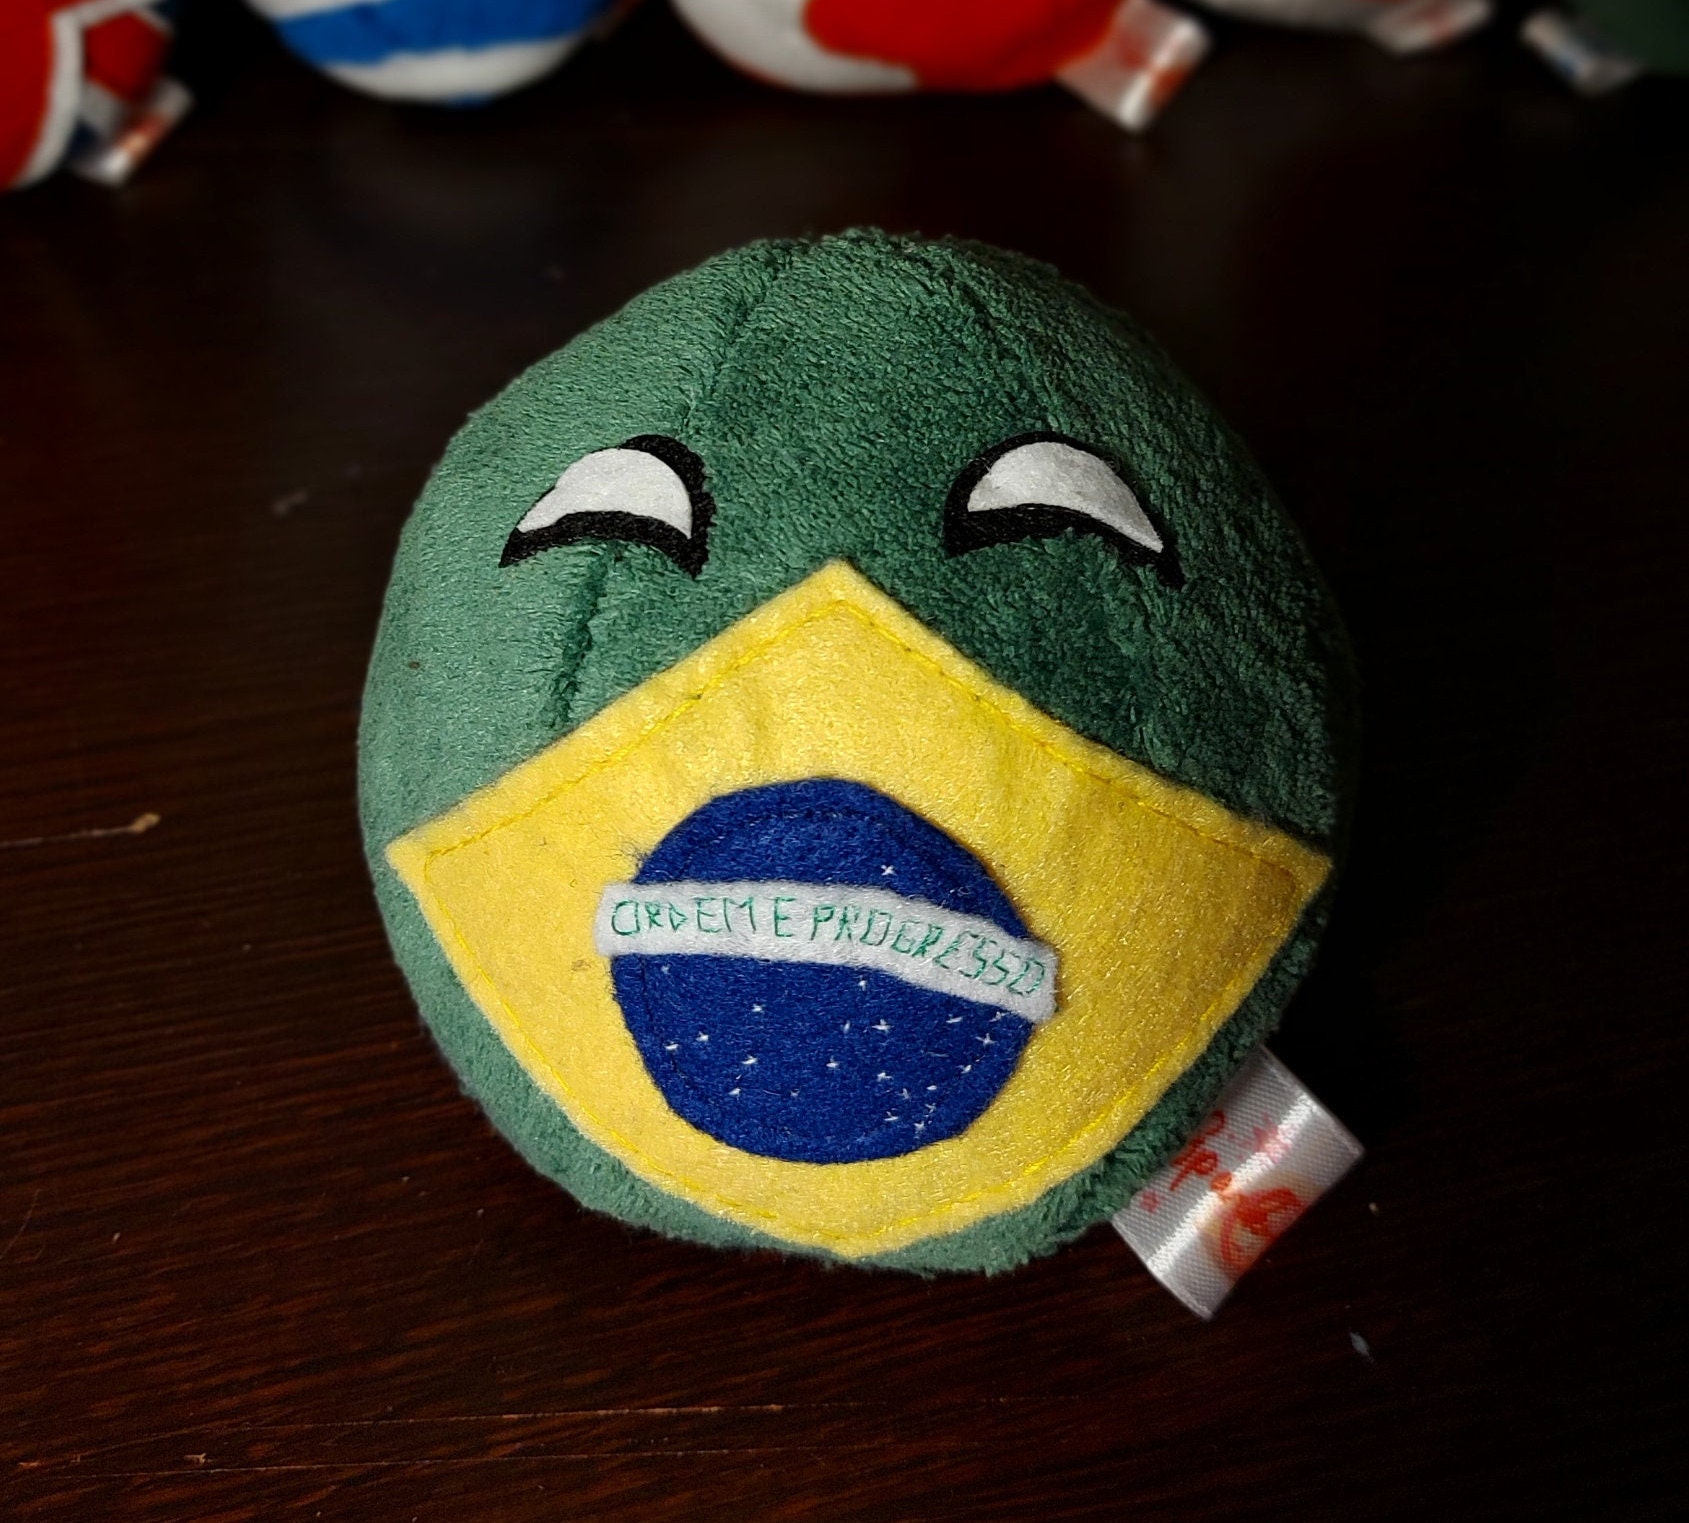 Brasil Countryball Polandball Plush Toy Fan Art 